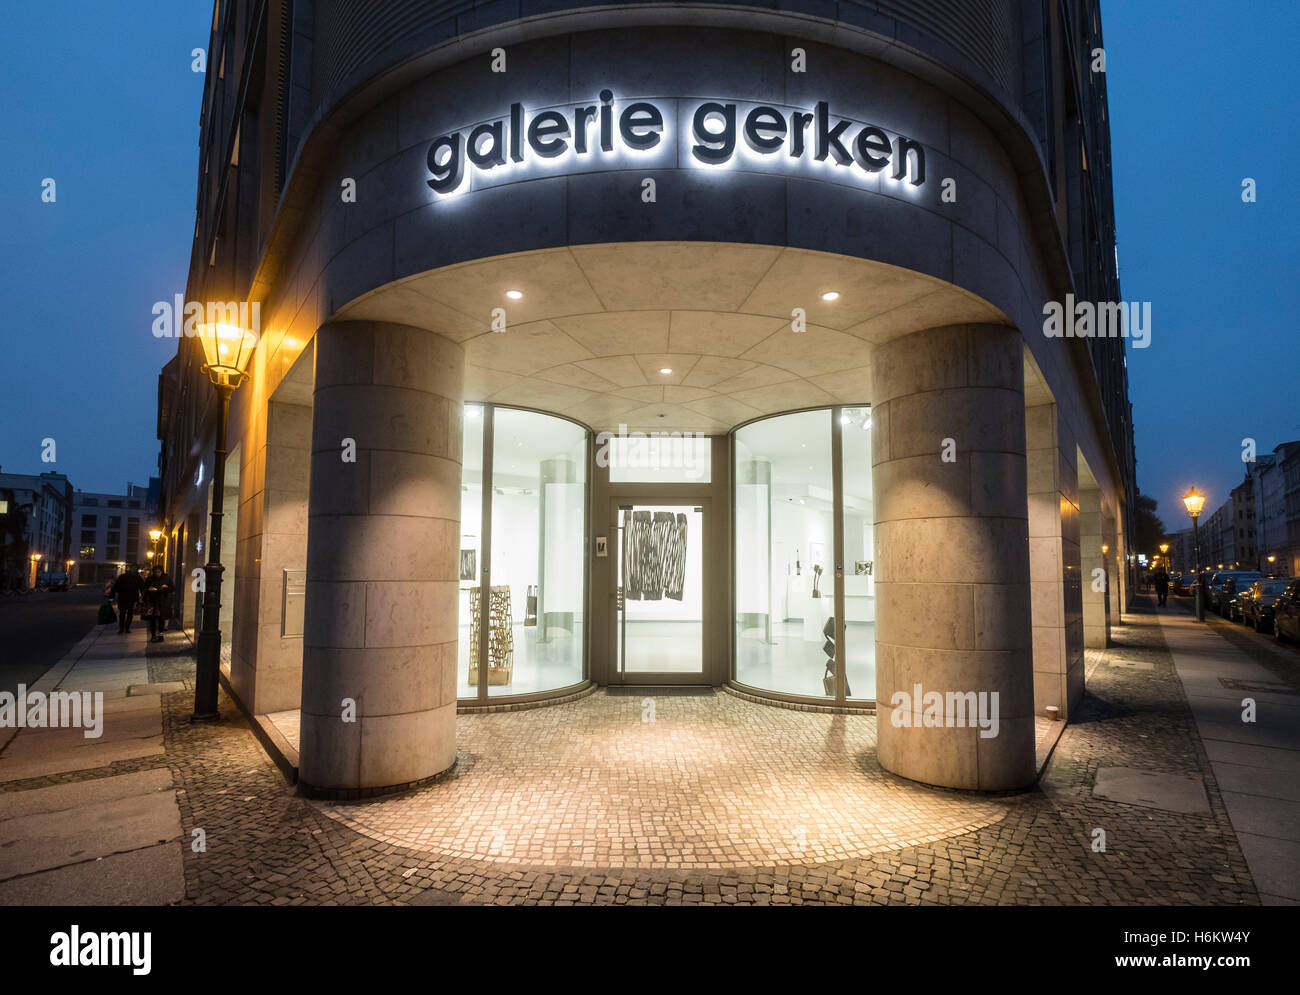 Exterior of Galerie Gerken, art gallery on Linienstrasse, a street with many art galleries in Mitte Berlin Germany Stock Photo